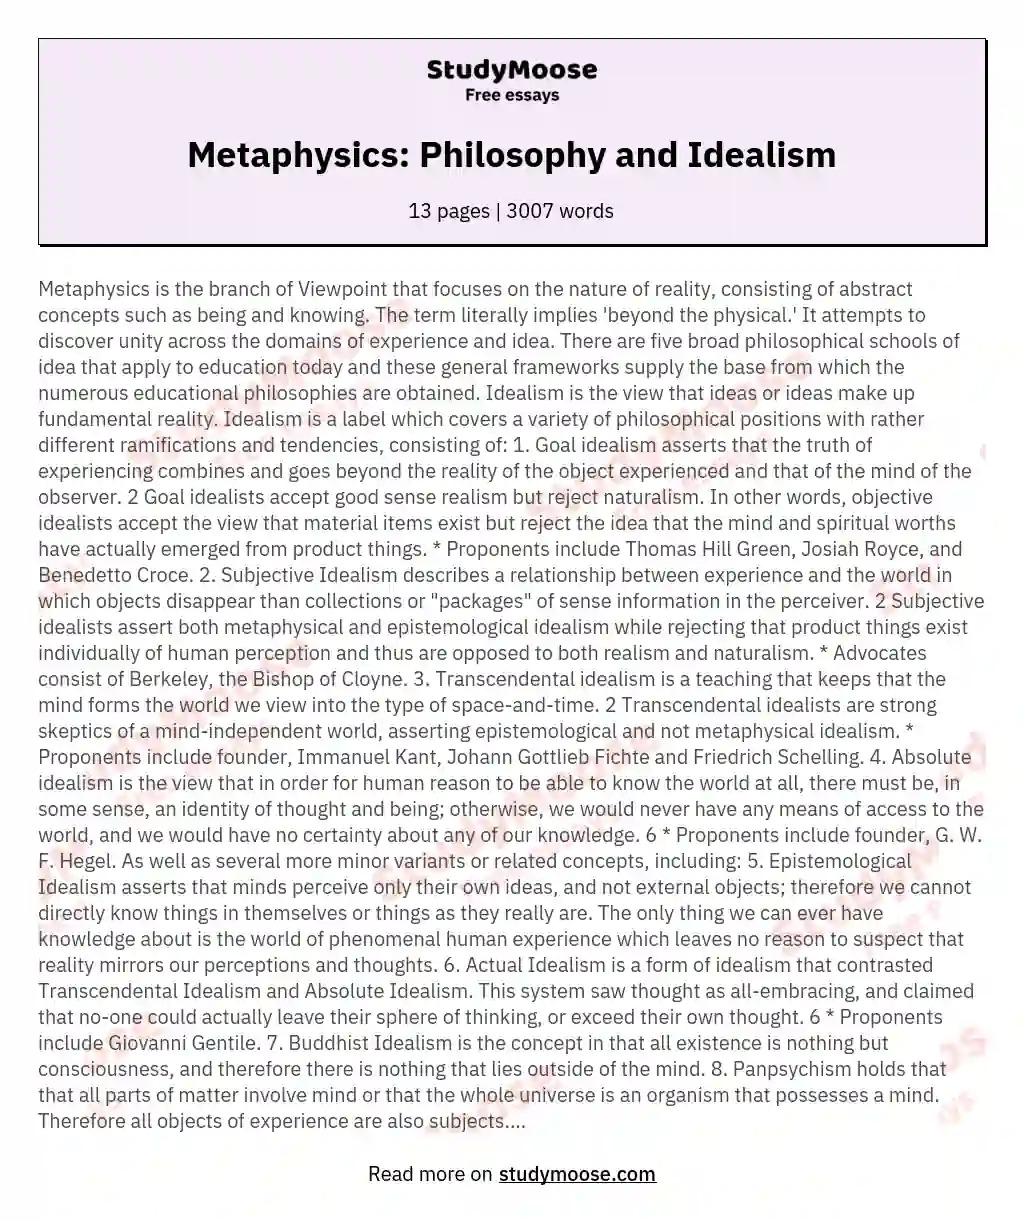 Metaphysics: Philosophy and Idealism essay